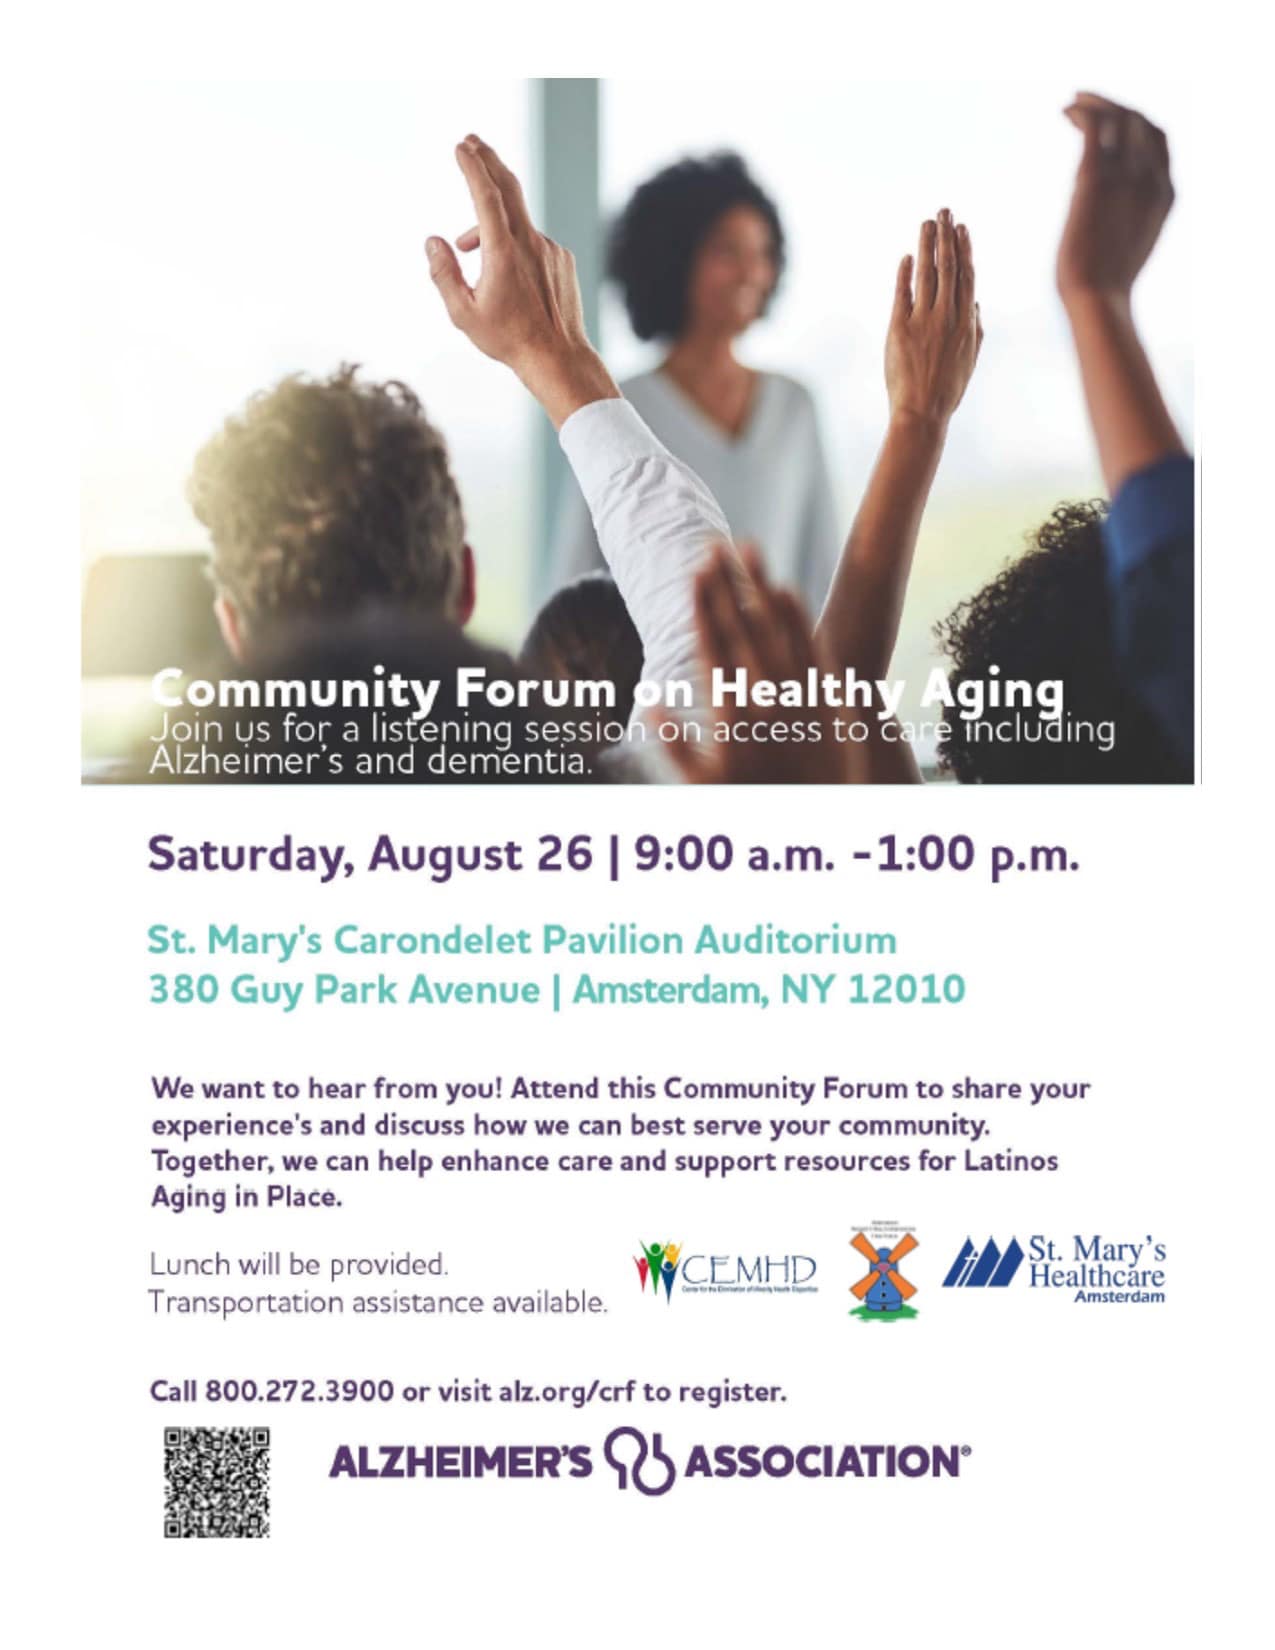 Community Forum on Healthy Aging